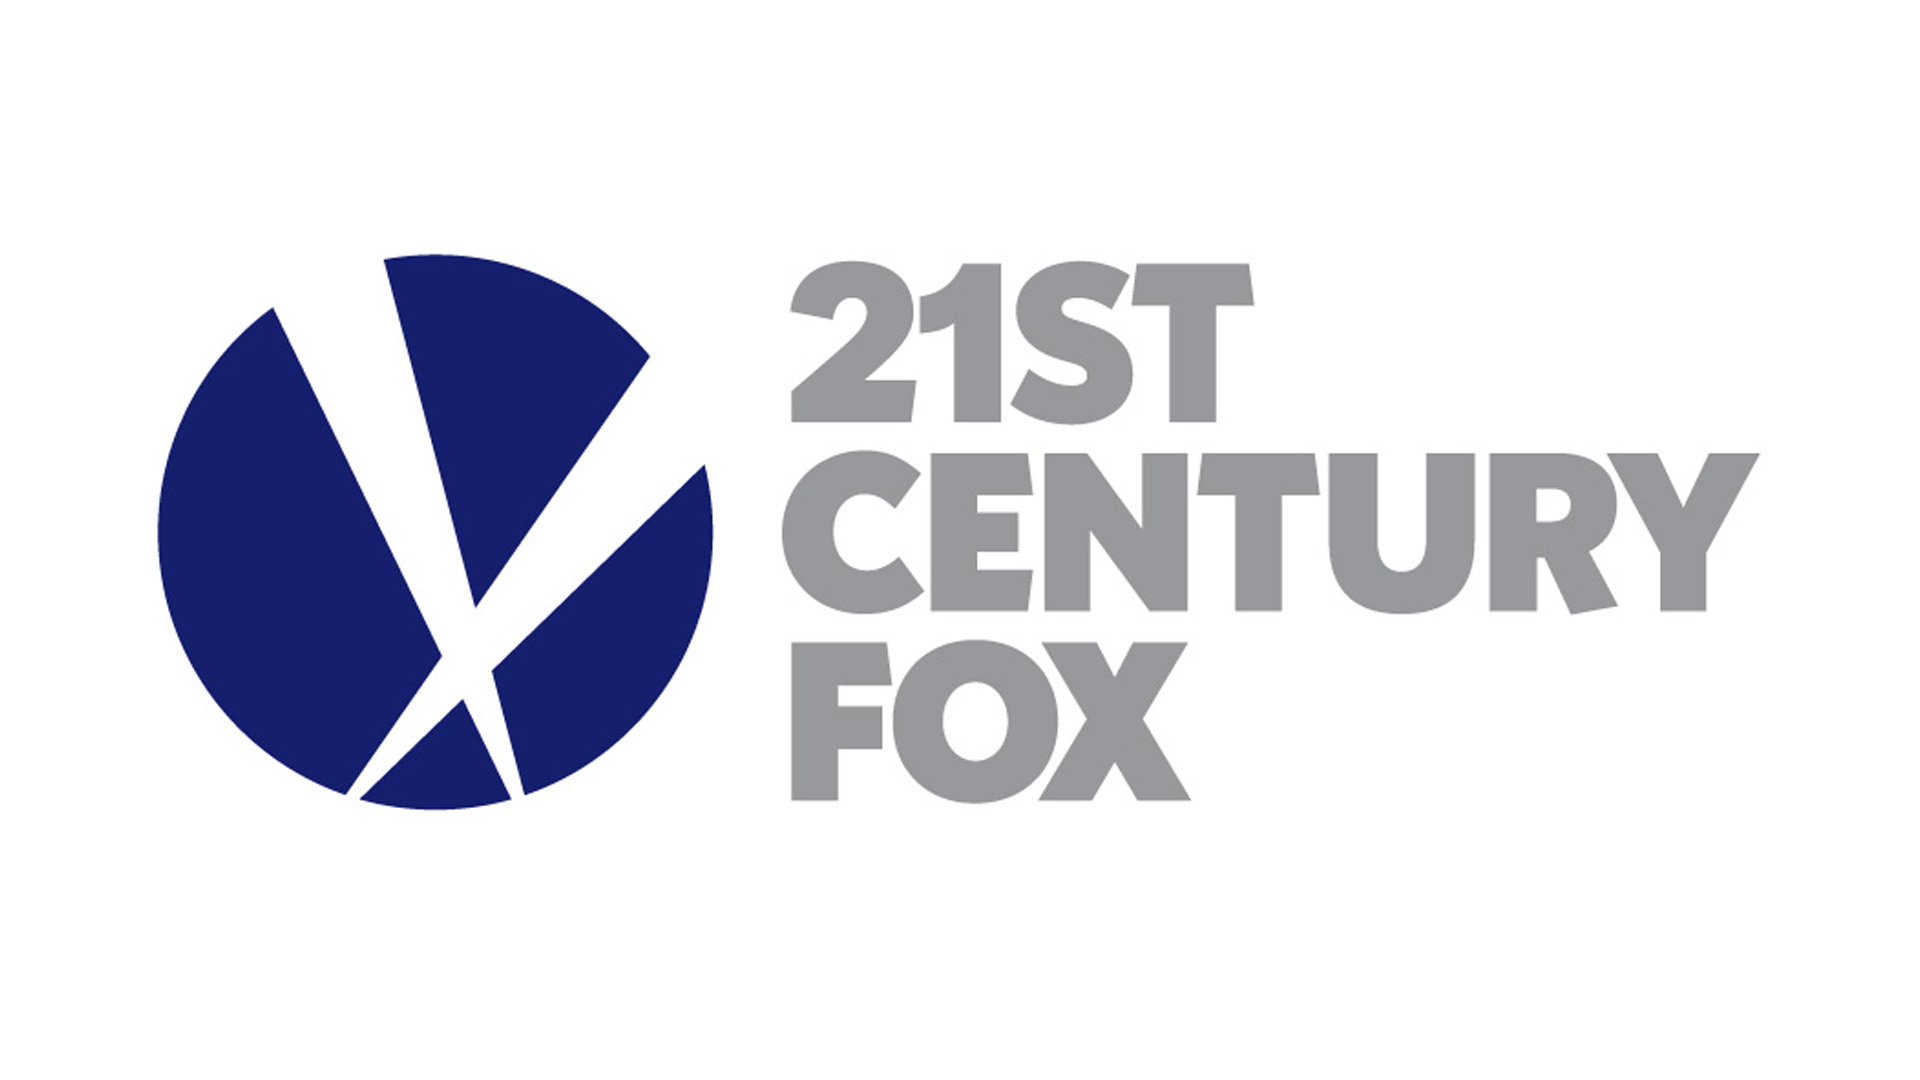 21st-century-fox-logo